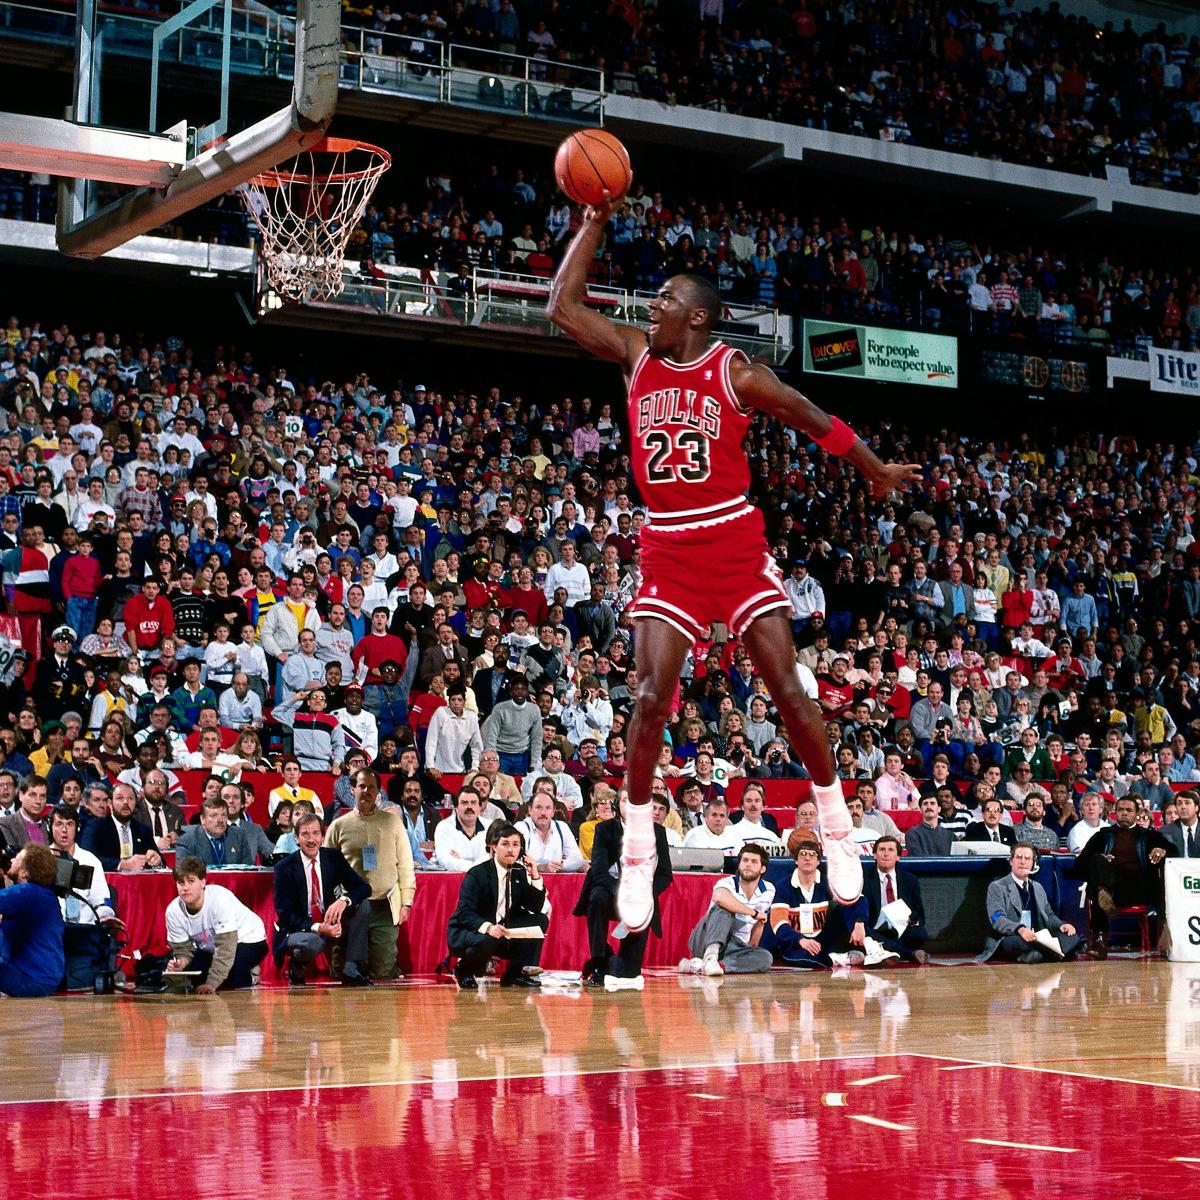 Top Michael Jordan Basketball Cards, Gallery, Best List, Most Valuable